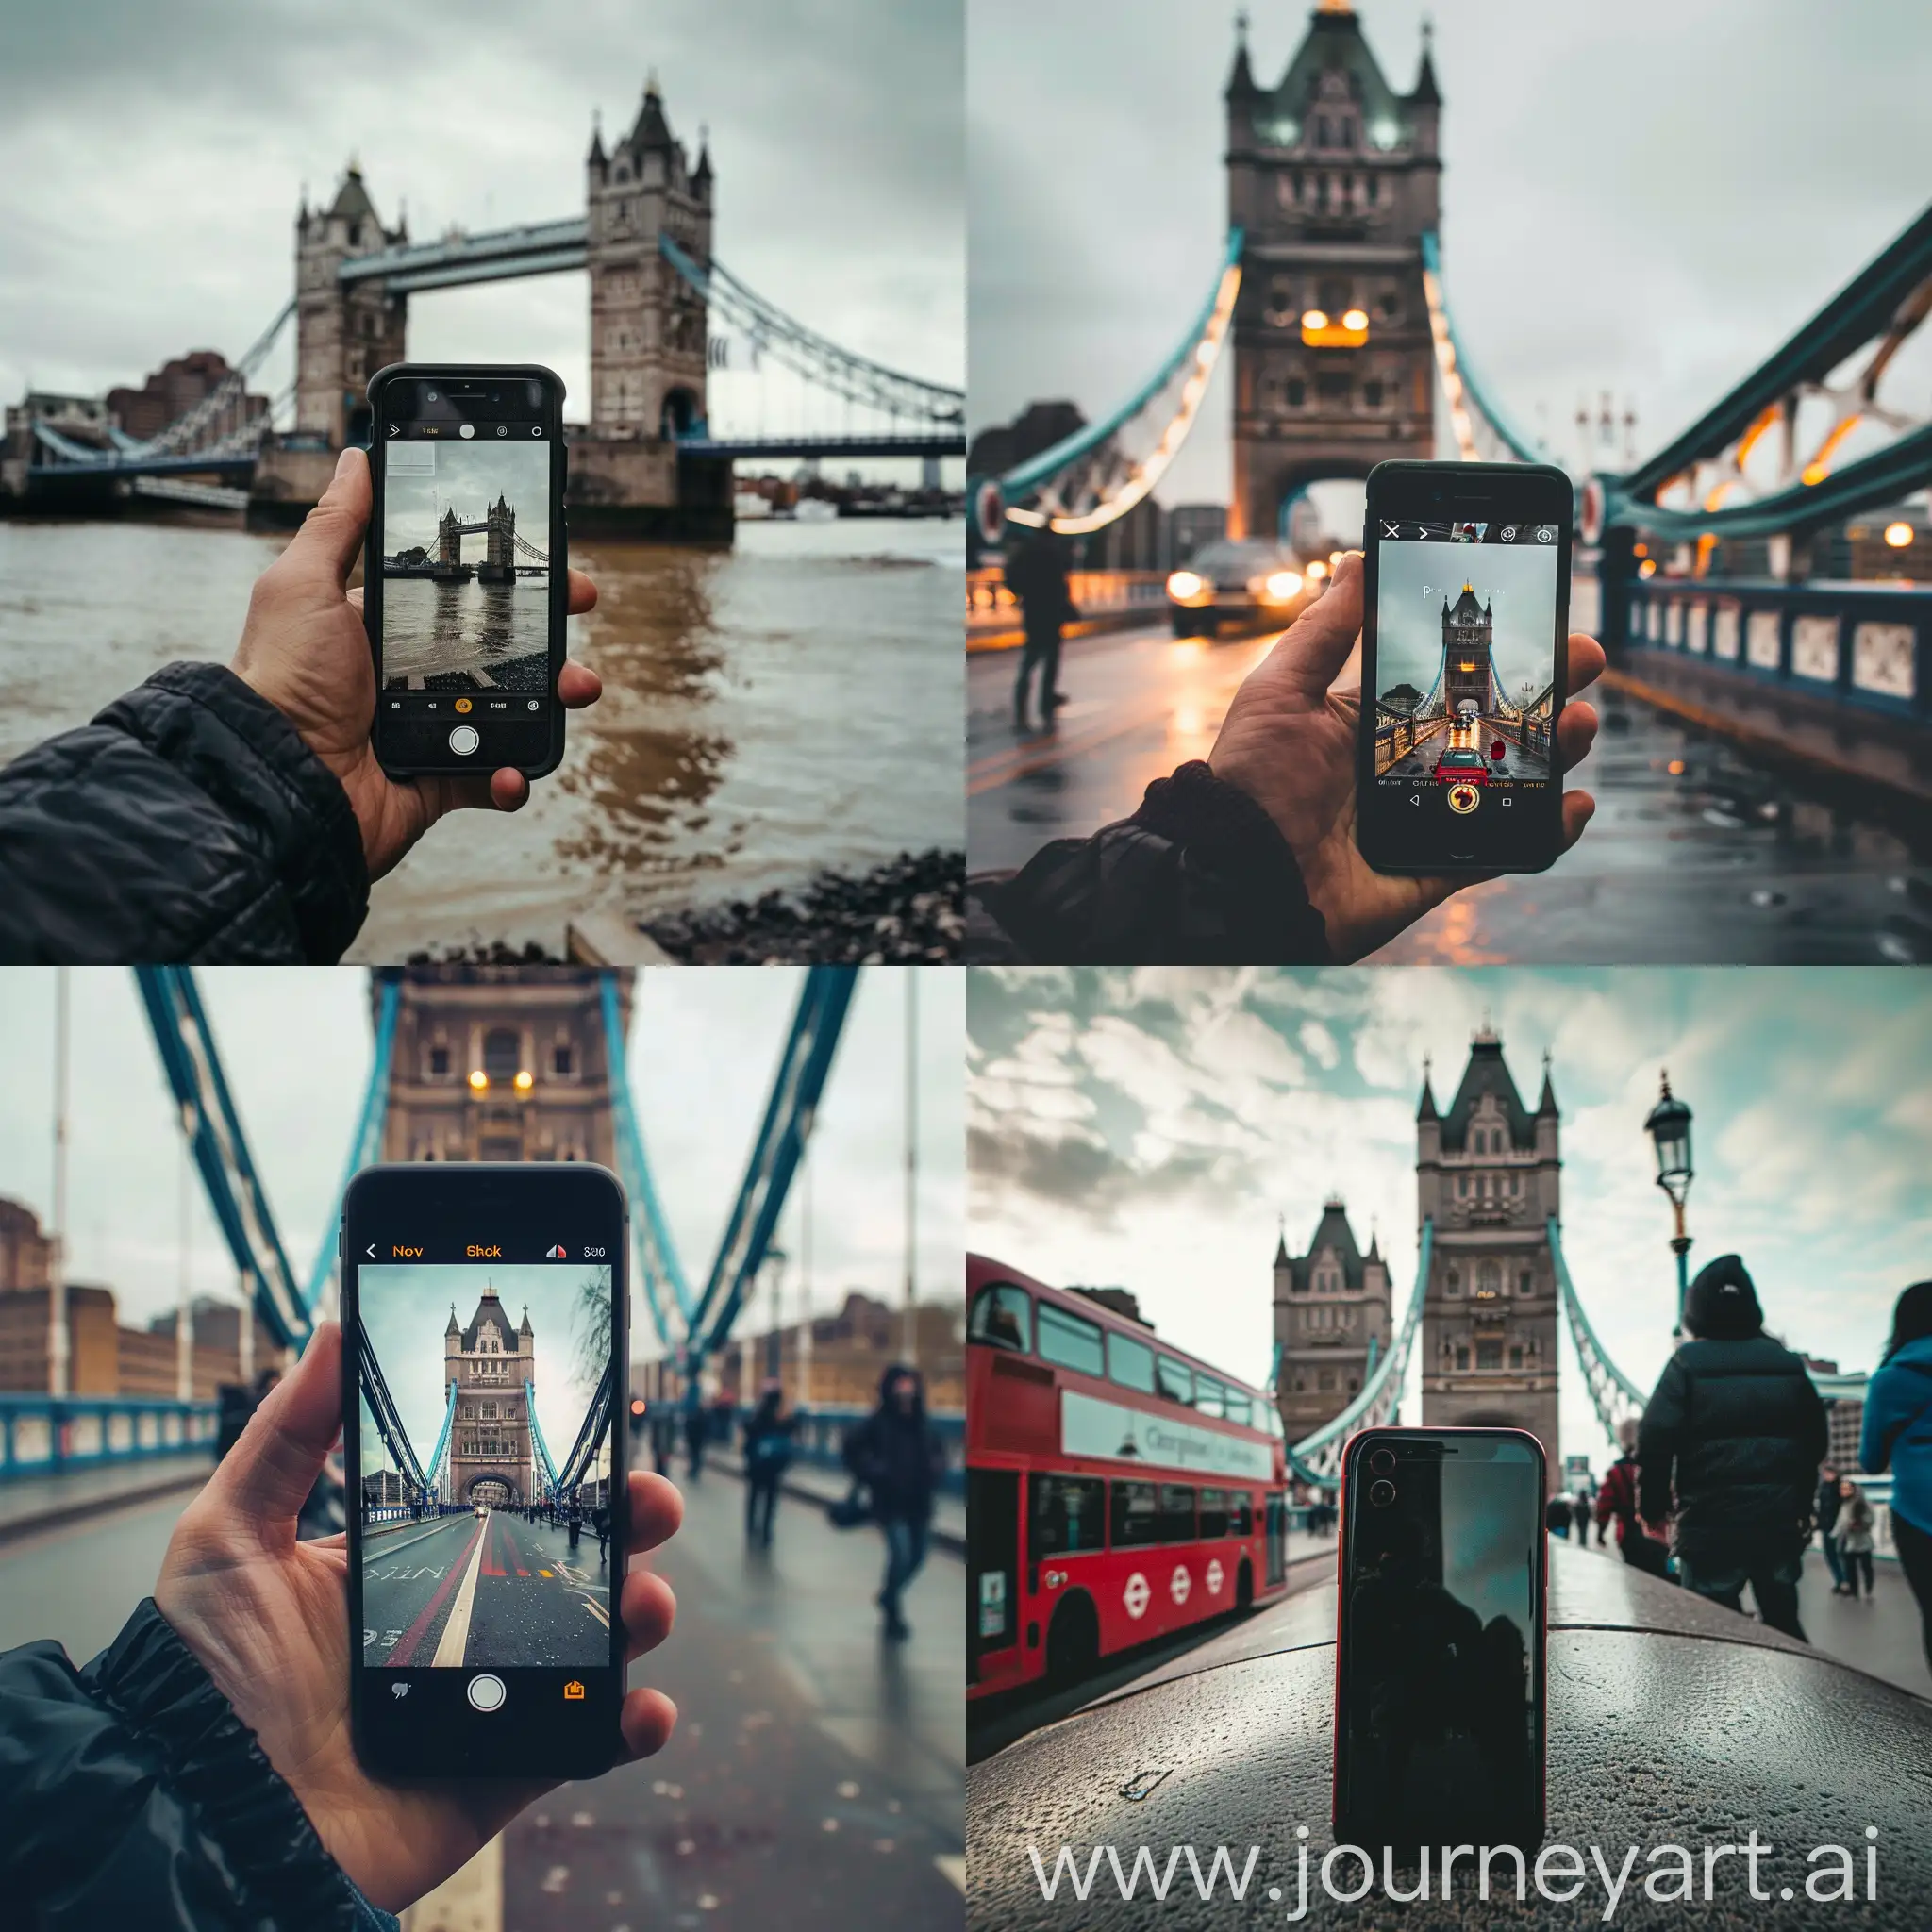 London-Bridge-Phone-Photo-Urban-Landmark-with-Vibrant-Colors-and-Symmetrical-Composition